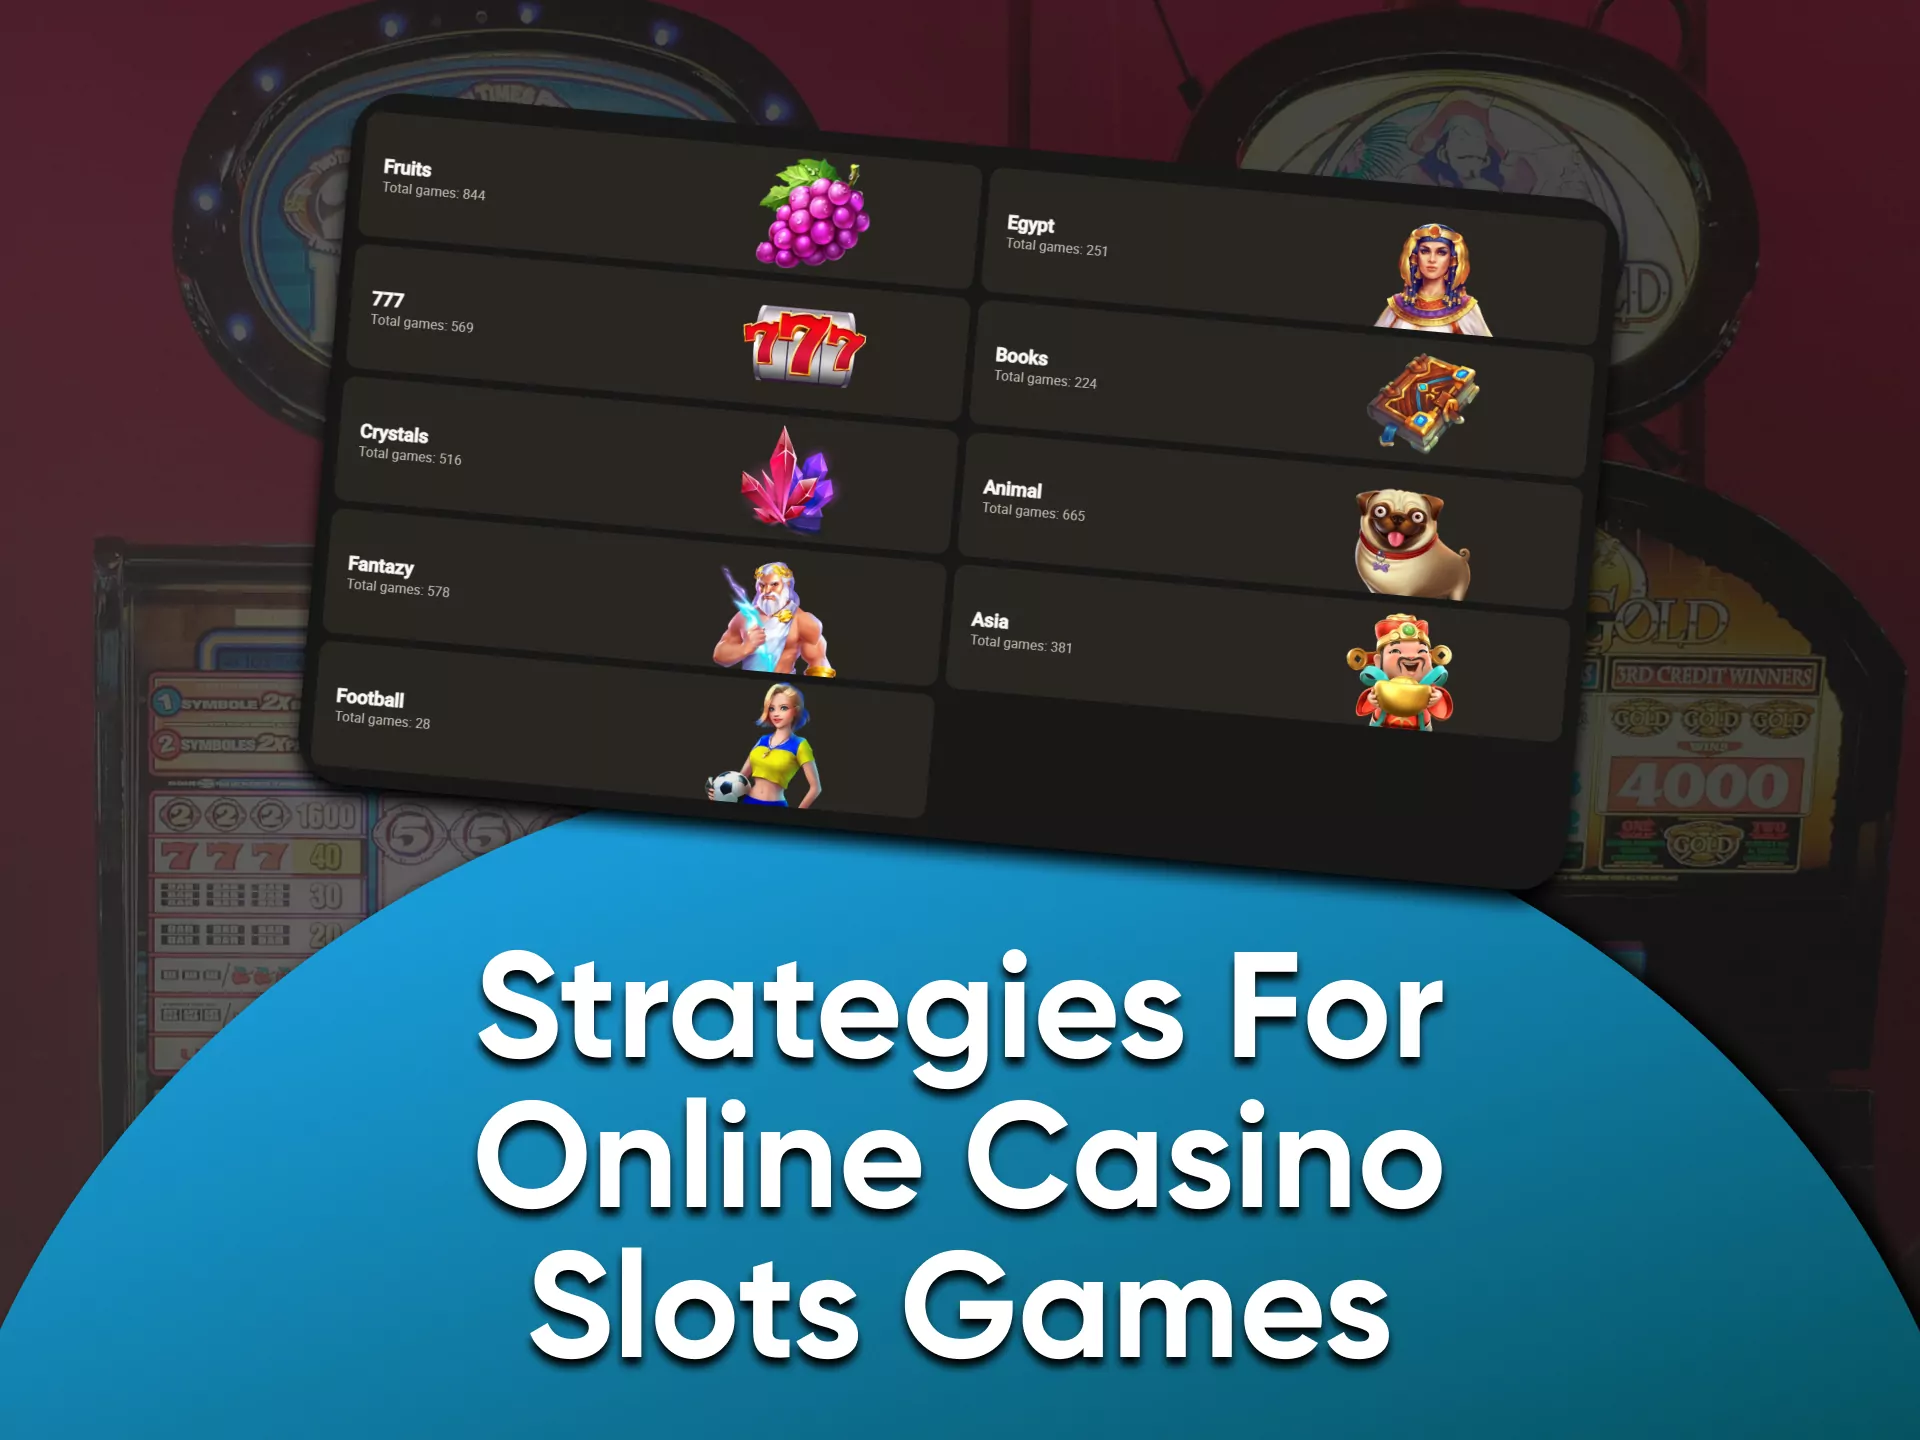 Play smart in slots online.